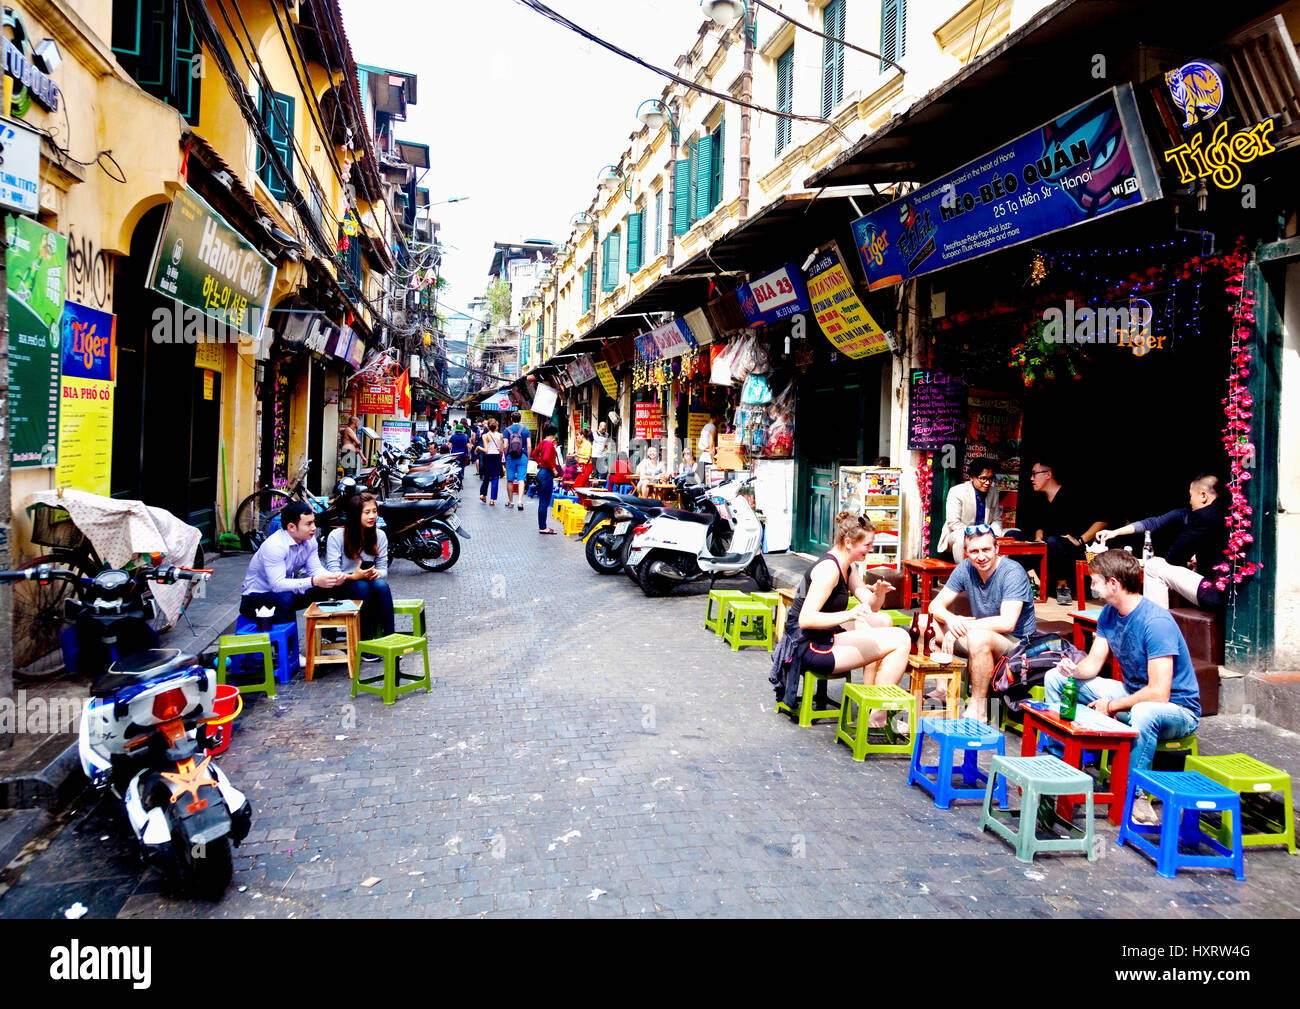 Tourists enjoy refreshments in Hanoi side street Stock Photo